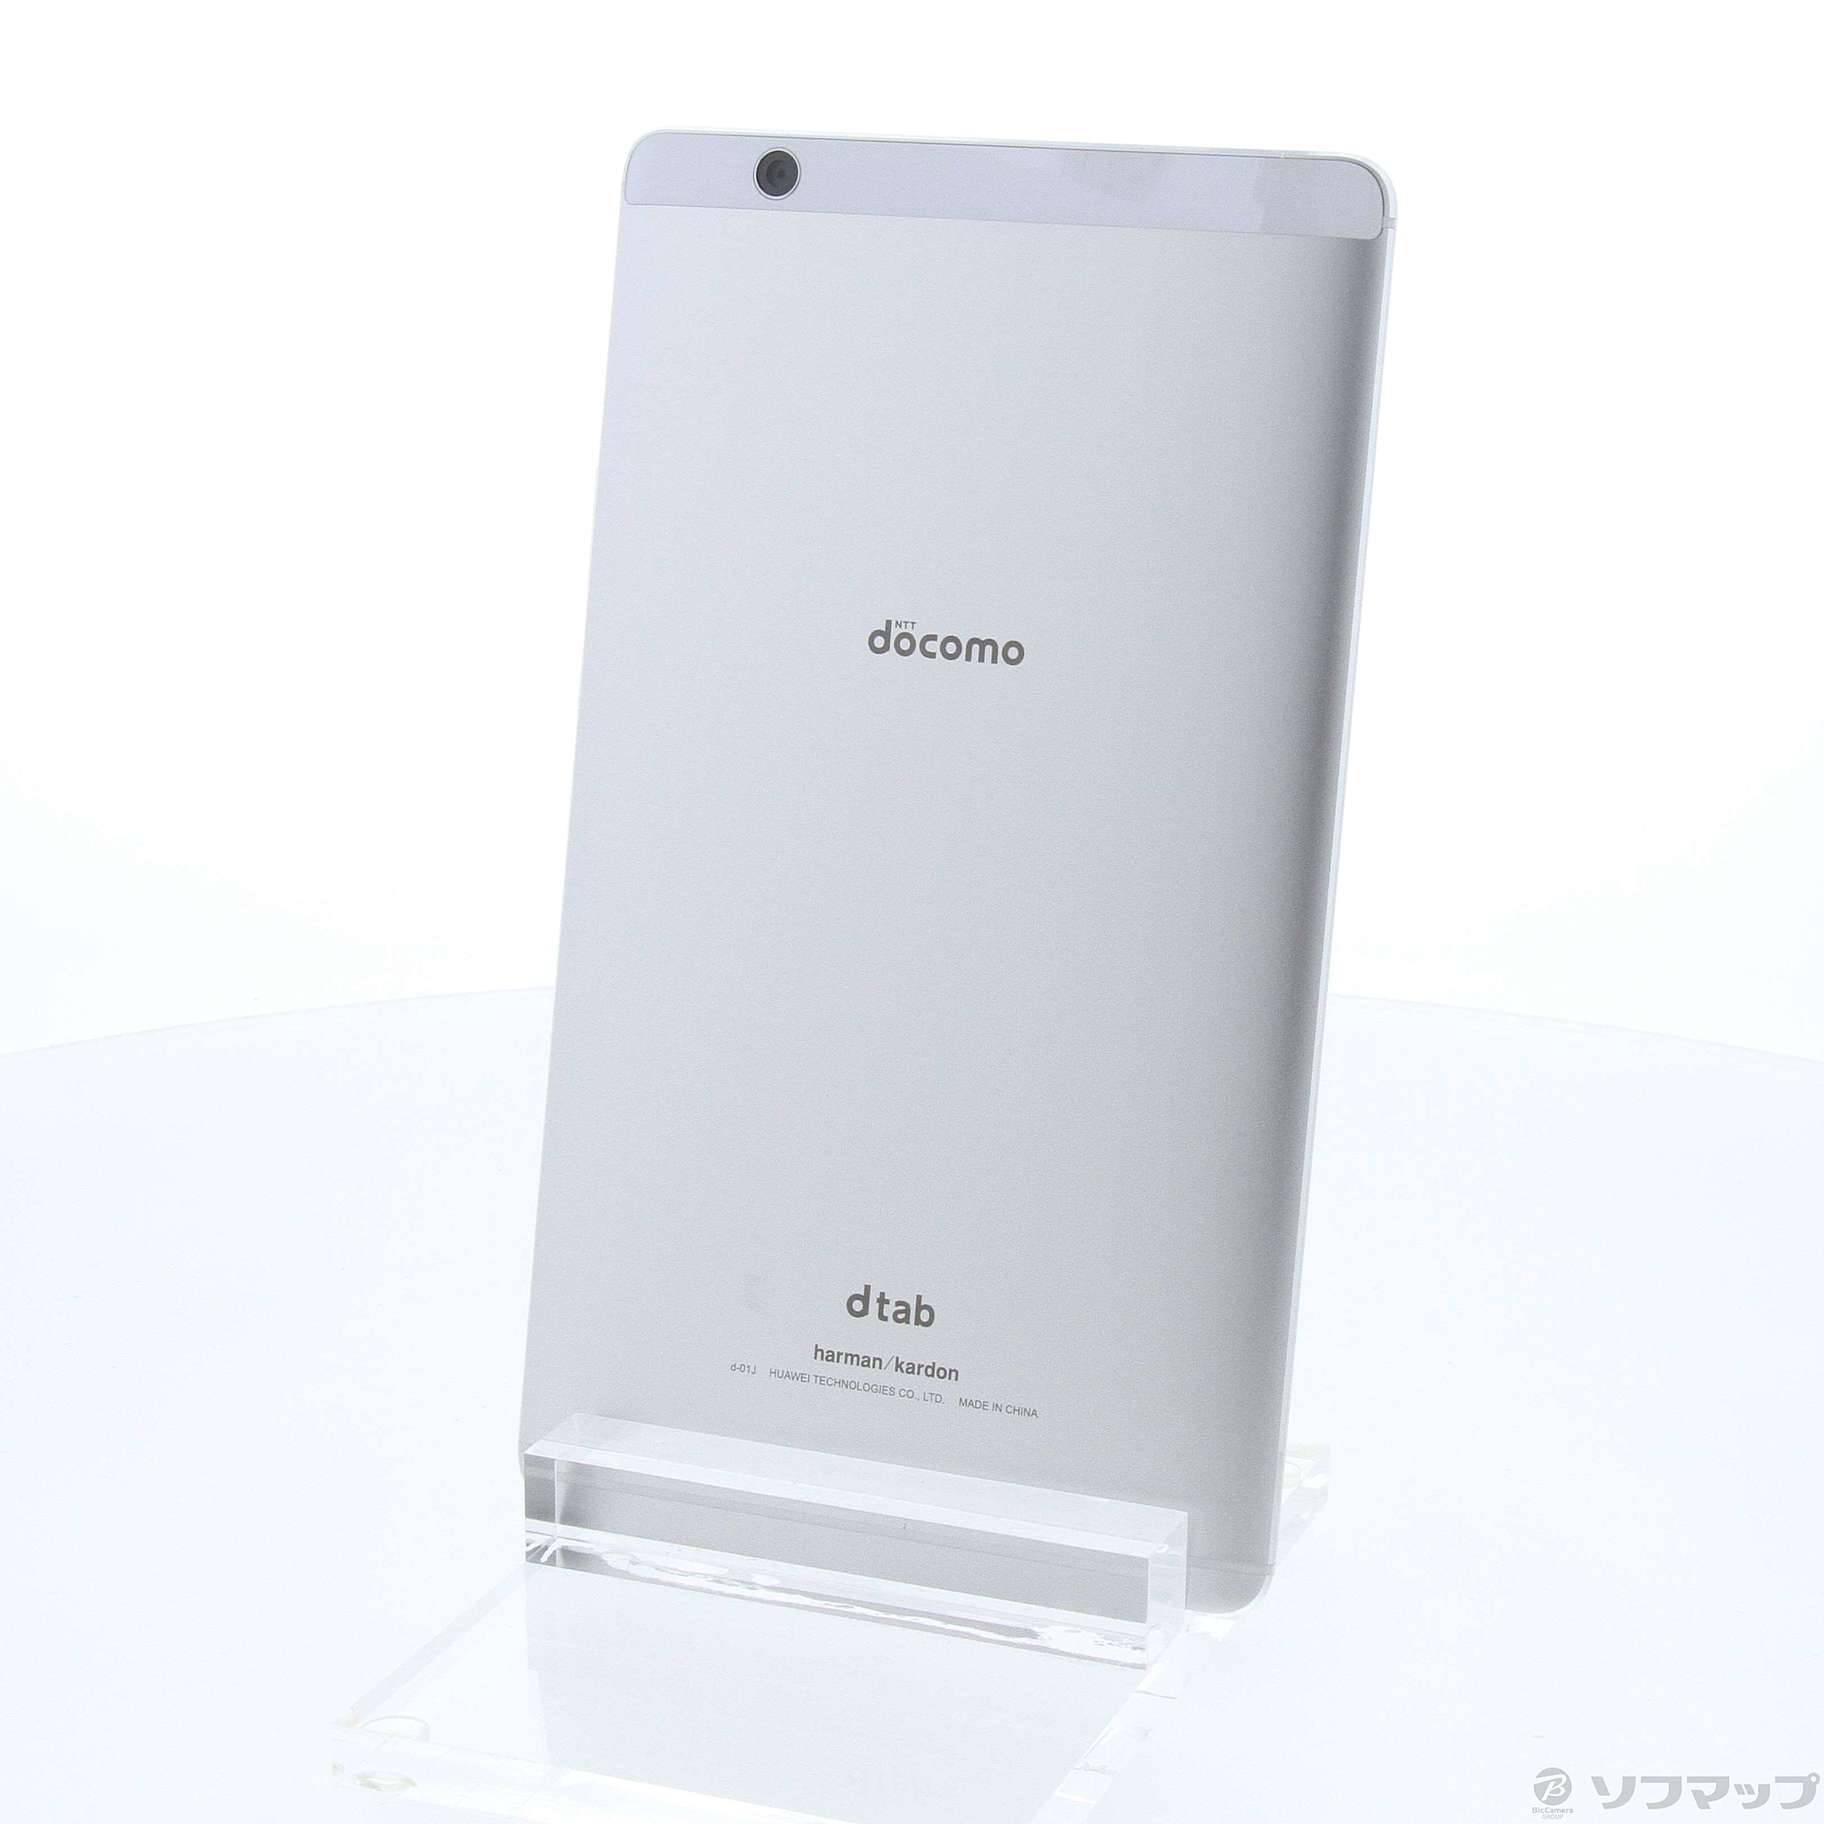 Huawei dtab Compact d-01J Silver